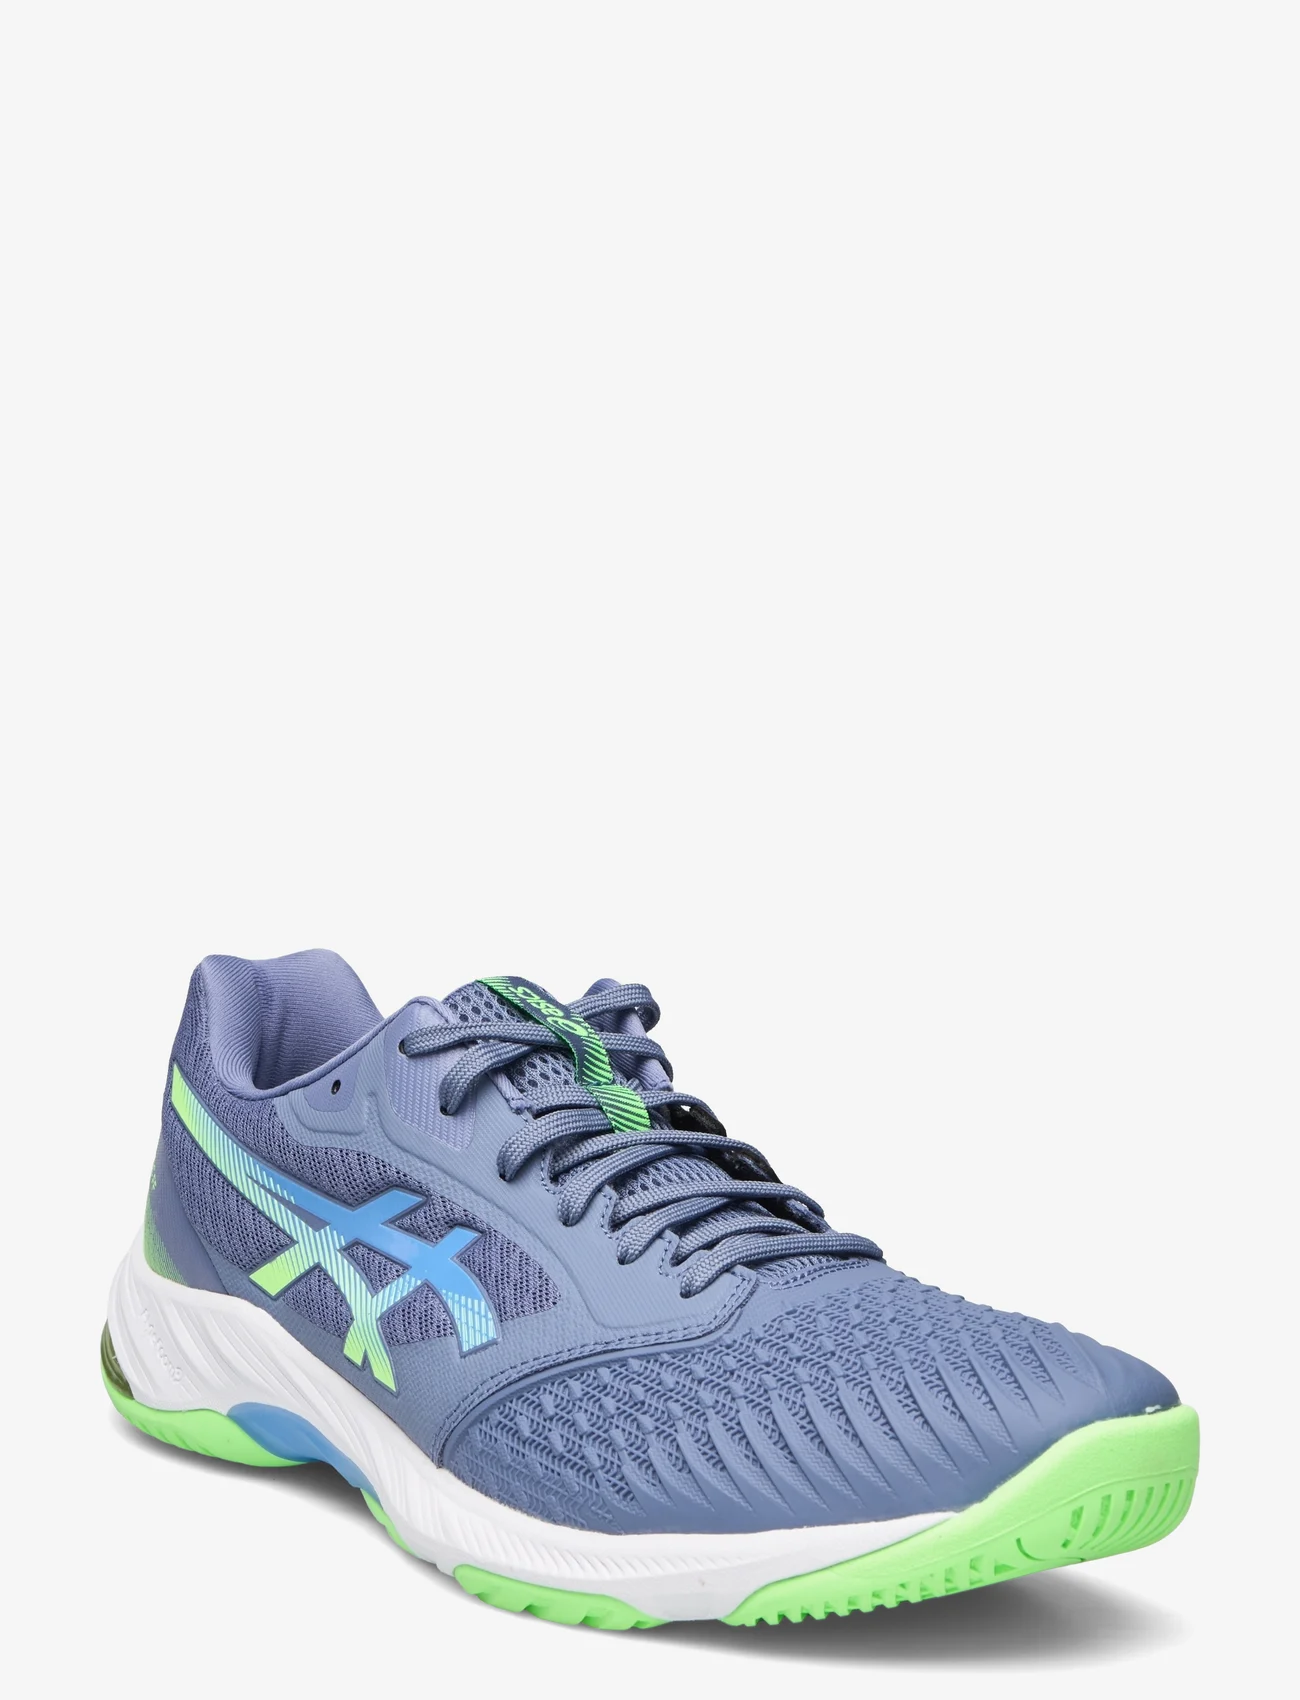 Asics - NETBURNER BALLISTIC FF 3 - indoor sports shoes - denim blue/waterscape - 0